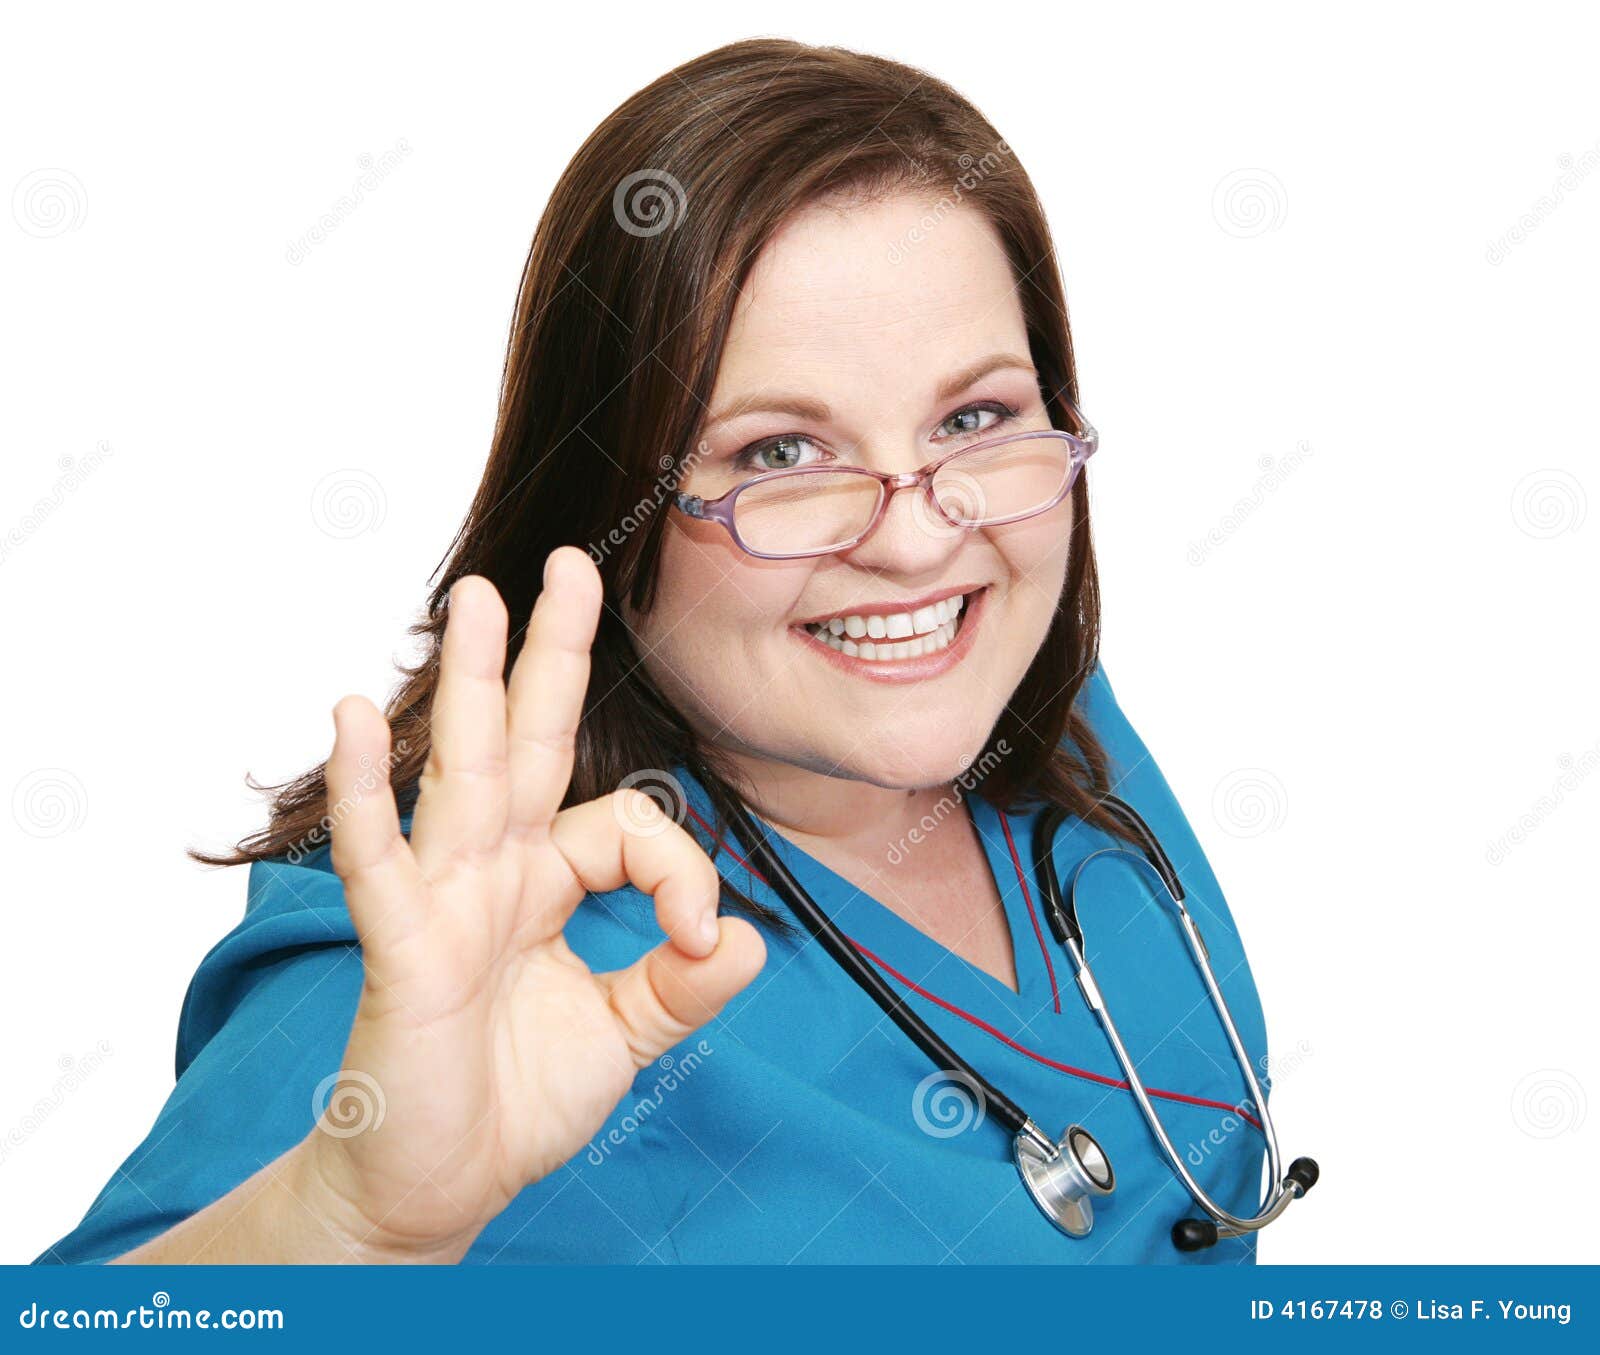 enthusiastic nurse - aokay